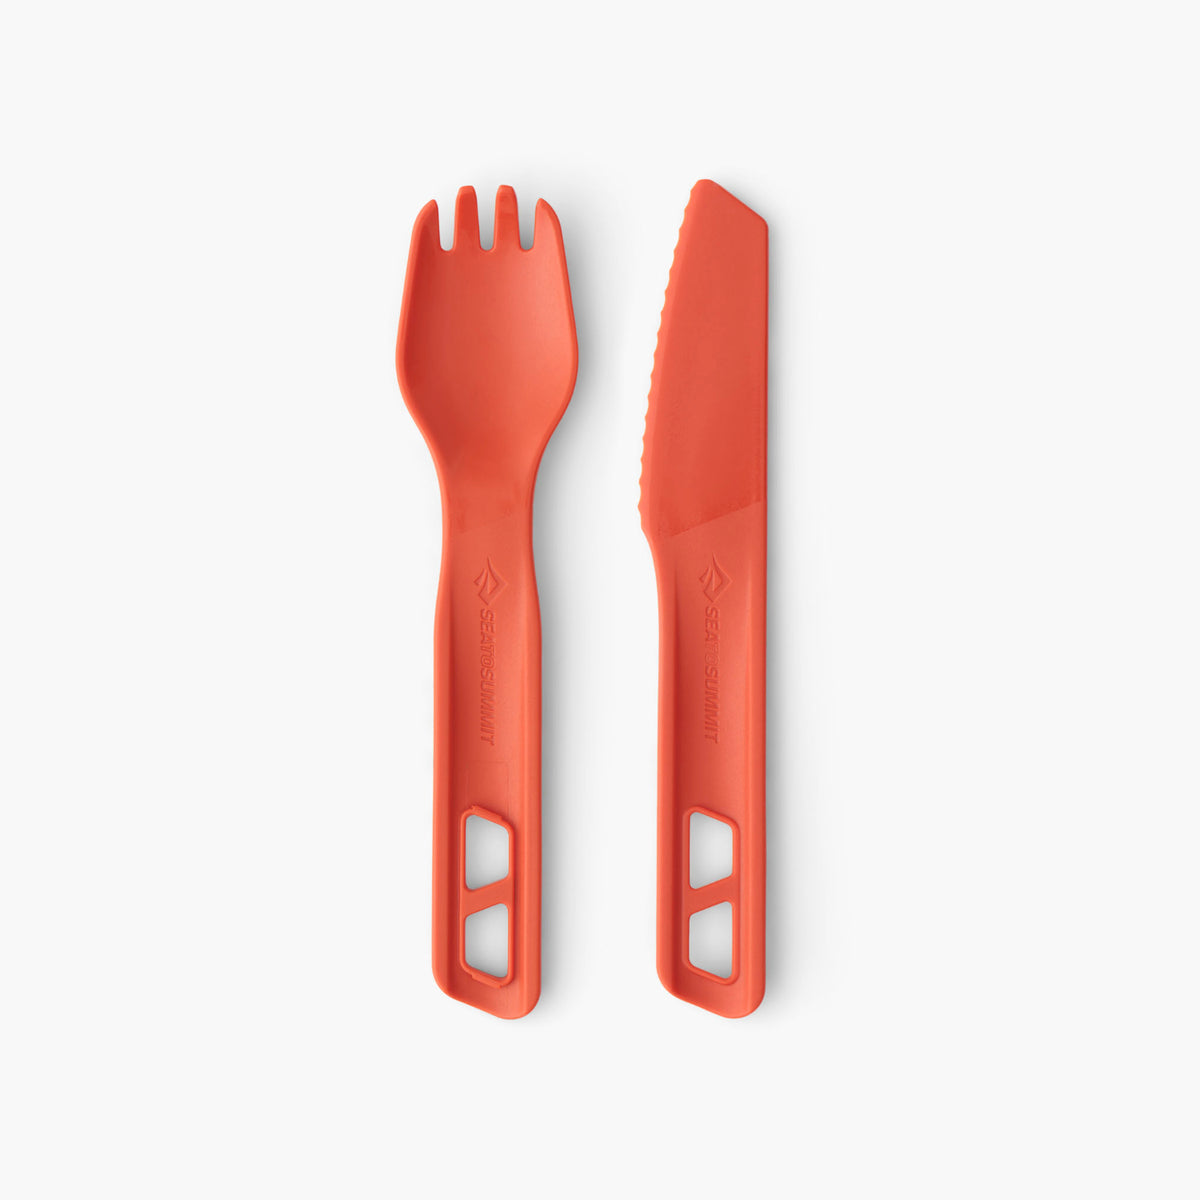 Sea to Summit Passage Cutlery Set (2 Piece) in spicy orange colour